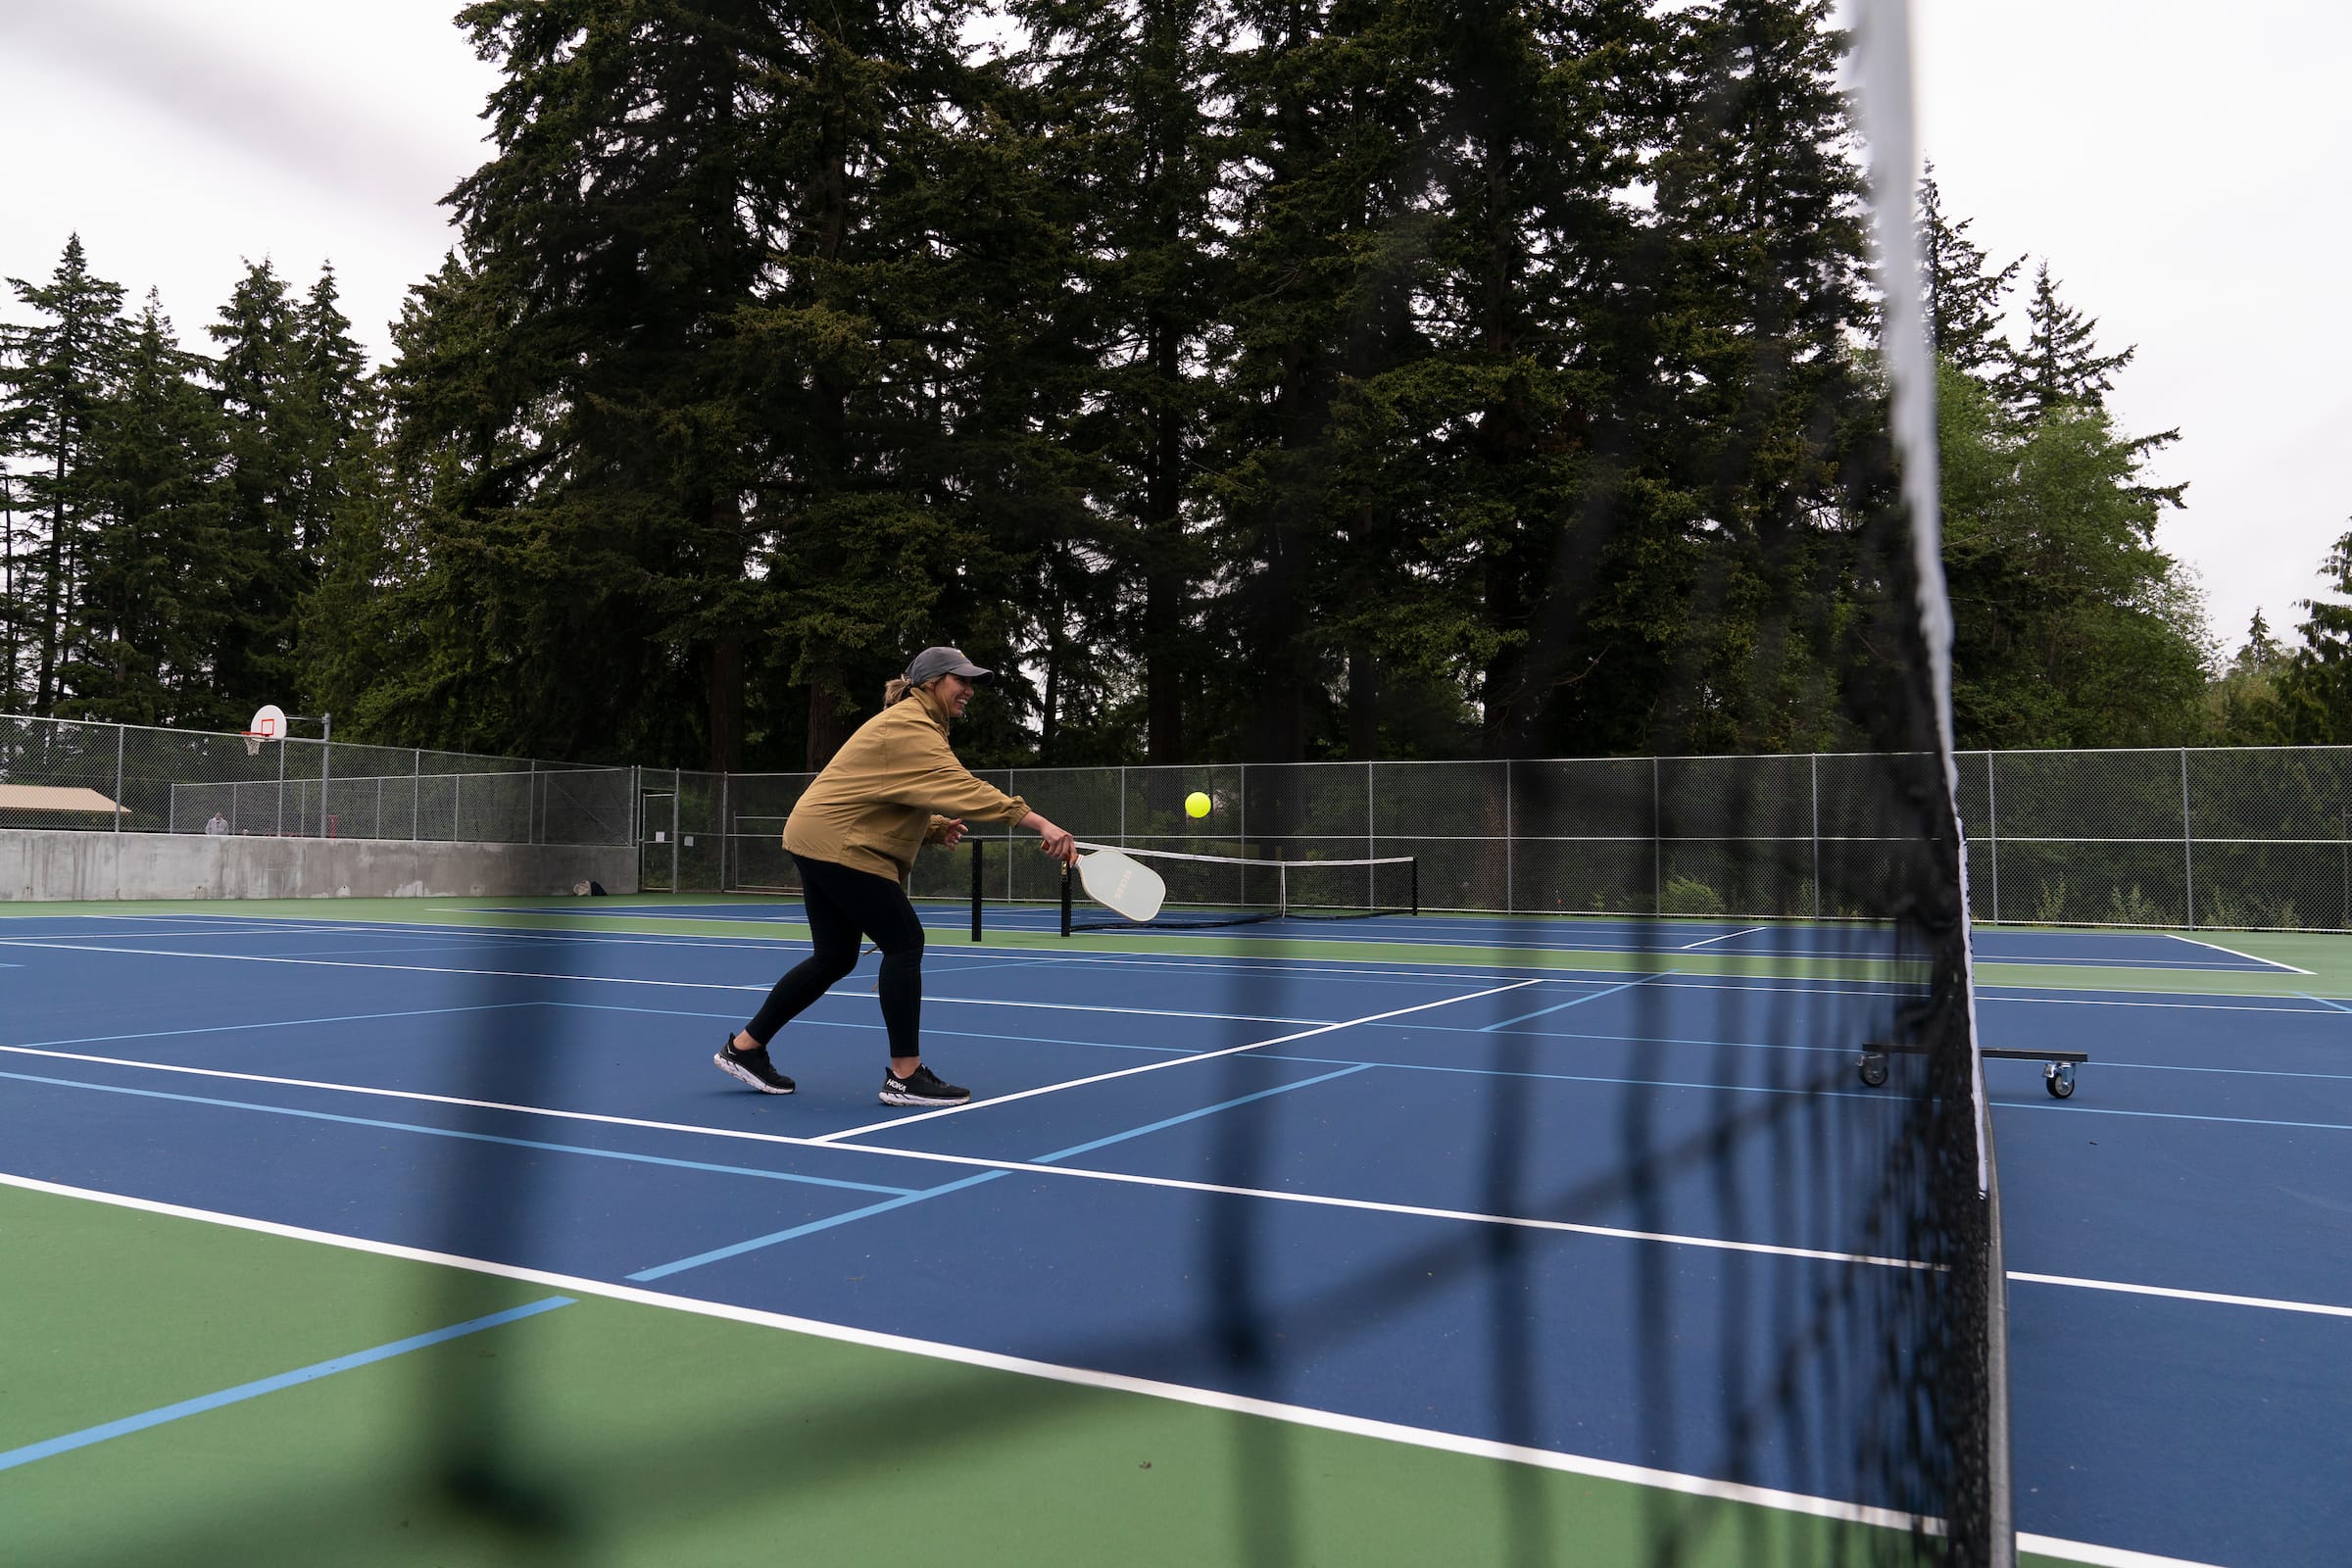 A woman is hitting a tennis ball on a tennis court.